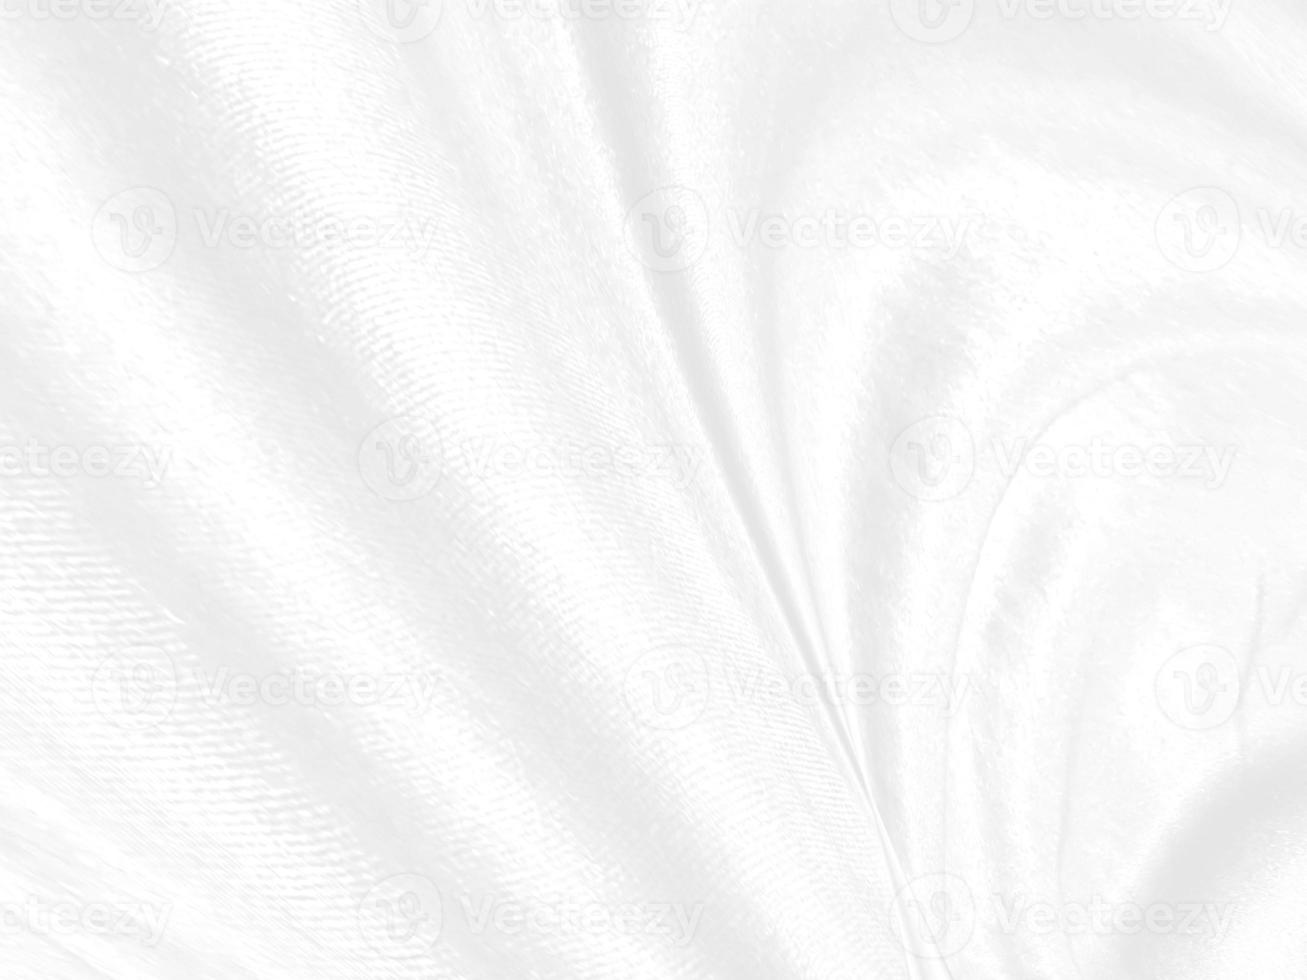 rena vävd mode textil- skön mjuk tyg abstrakt slät kurva form dekorativ vit bakgrund foto